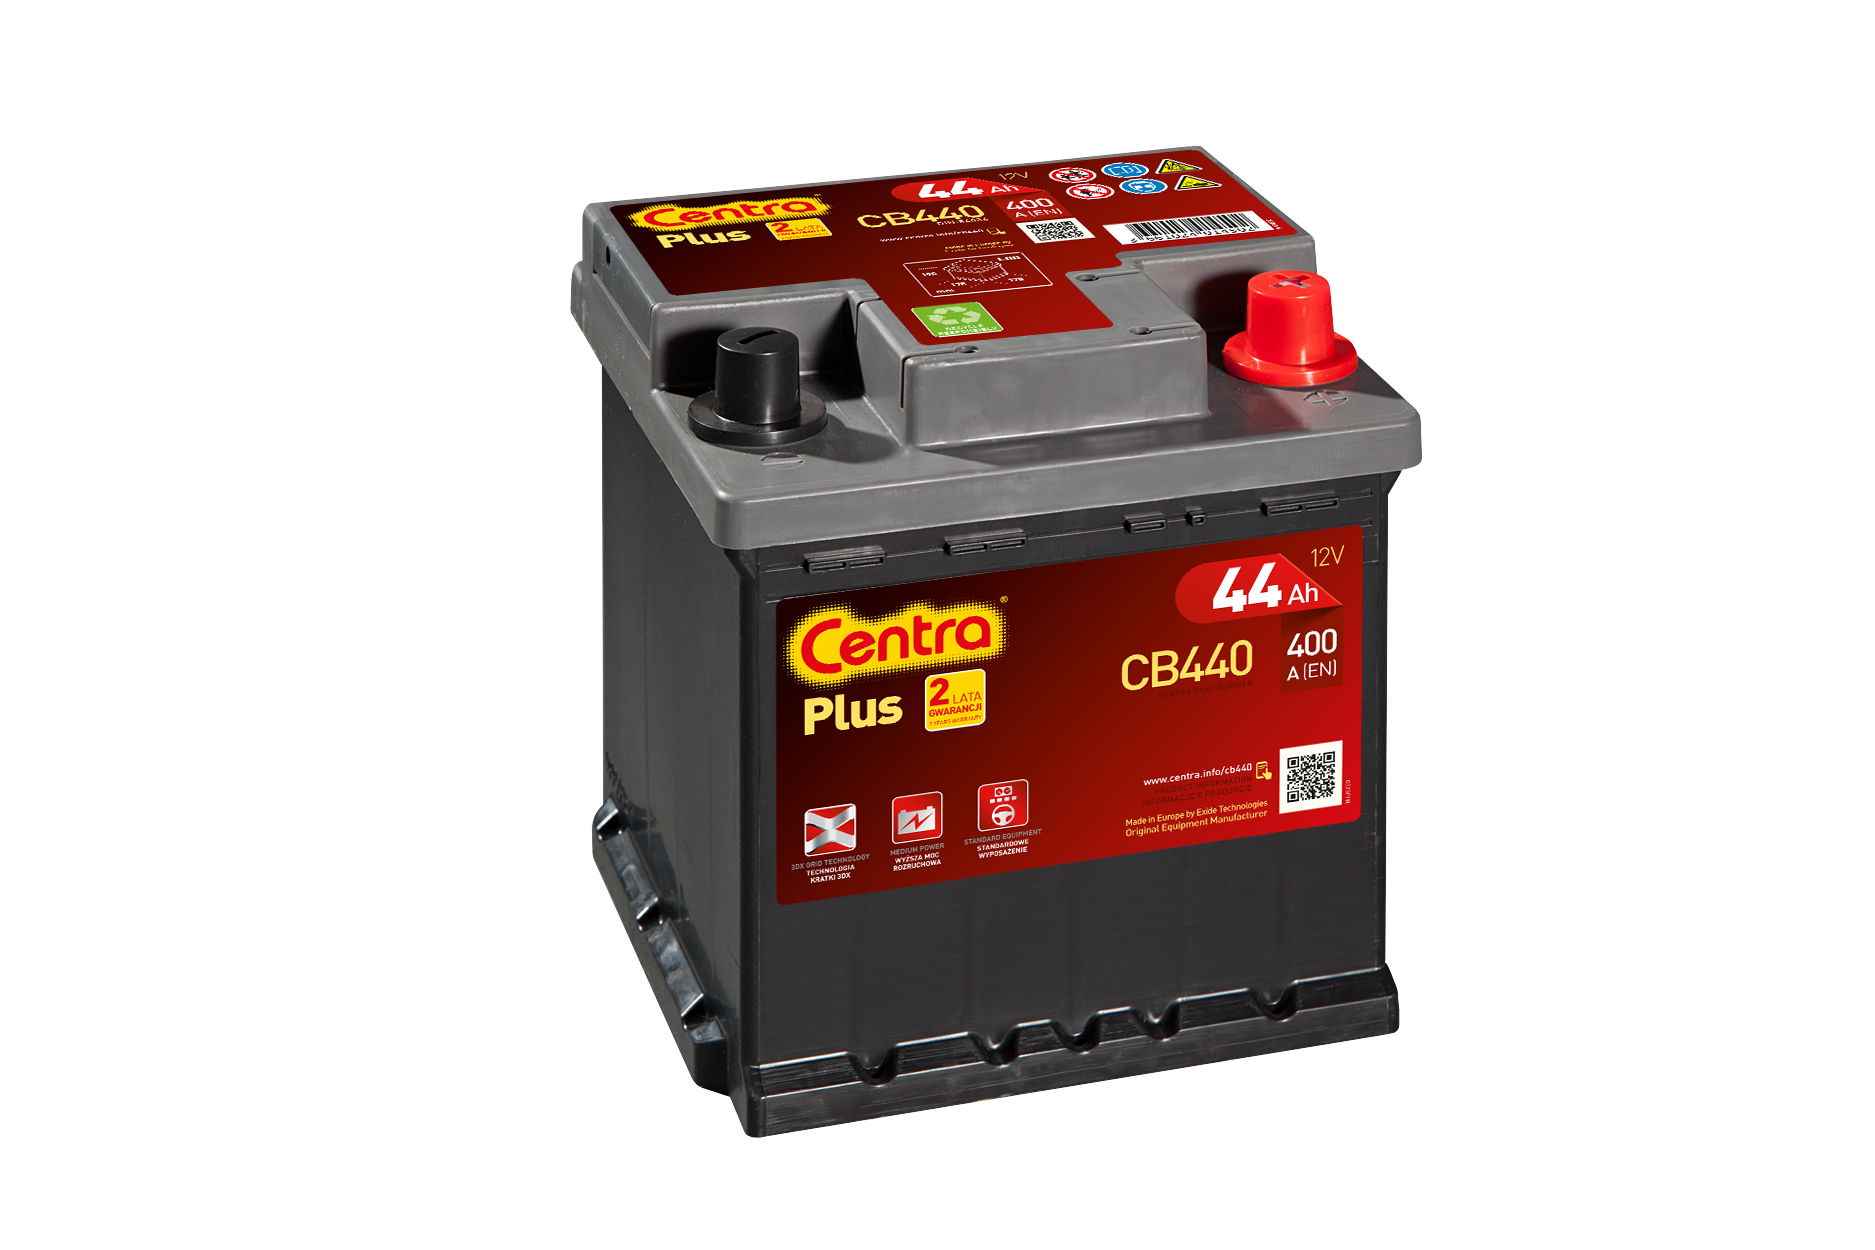 CENTRA CB440 Plus Batterie 12V 44Ah 400A B13 L0 Bleiakkumulator